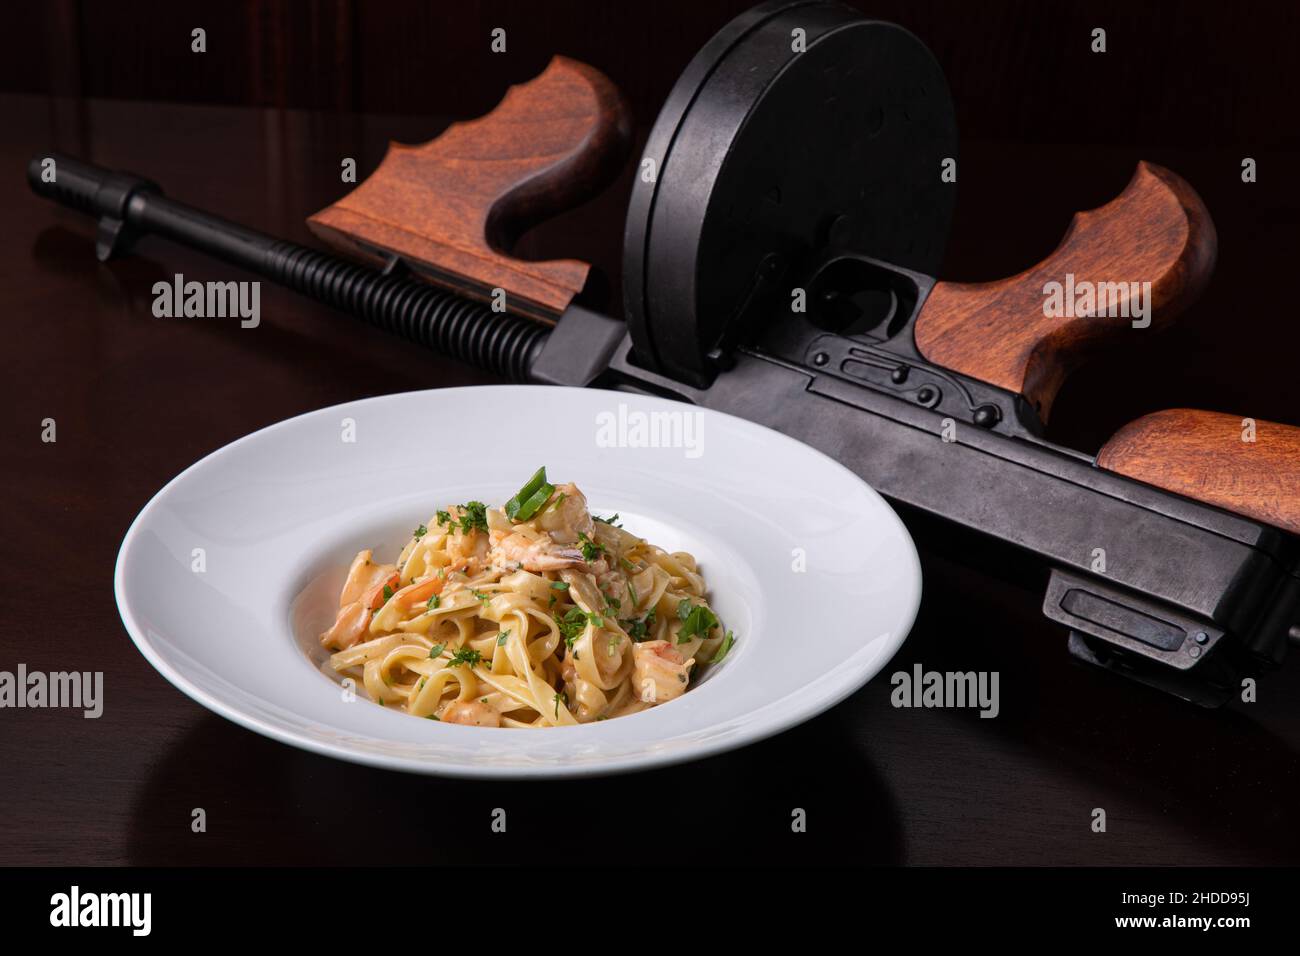 Thompson submachine gun and Italian pasta with prawns chili pepper and greens Stock Photo